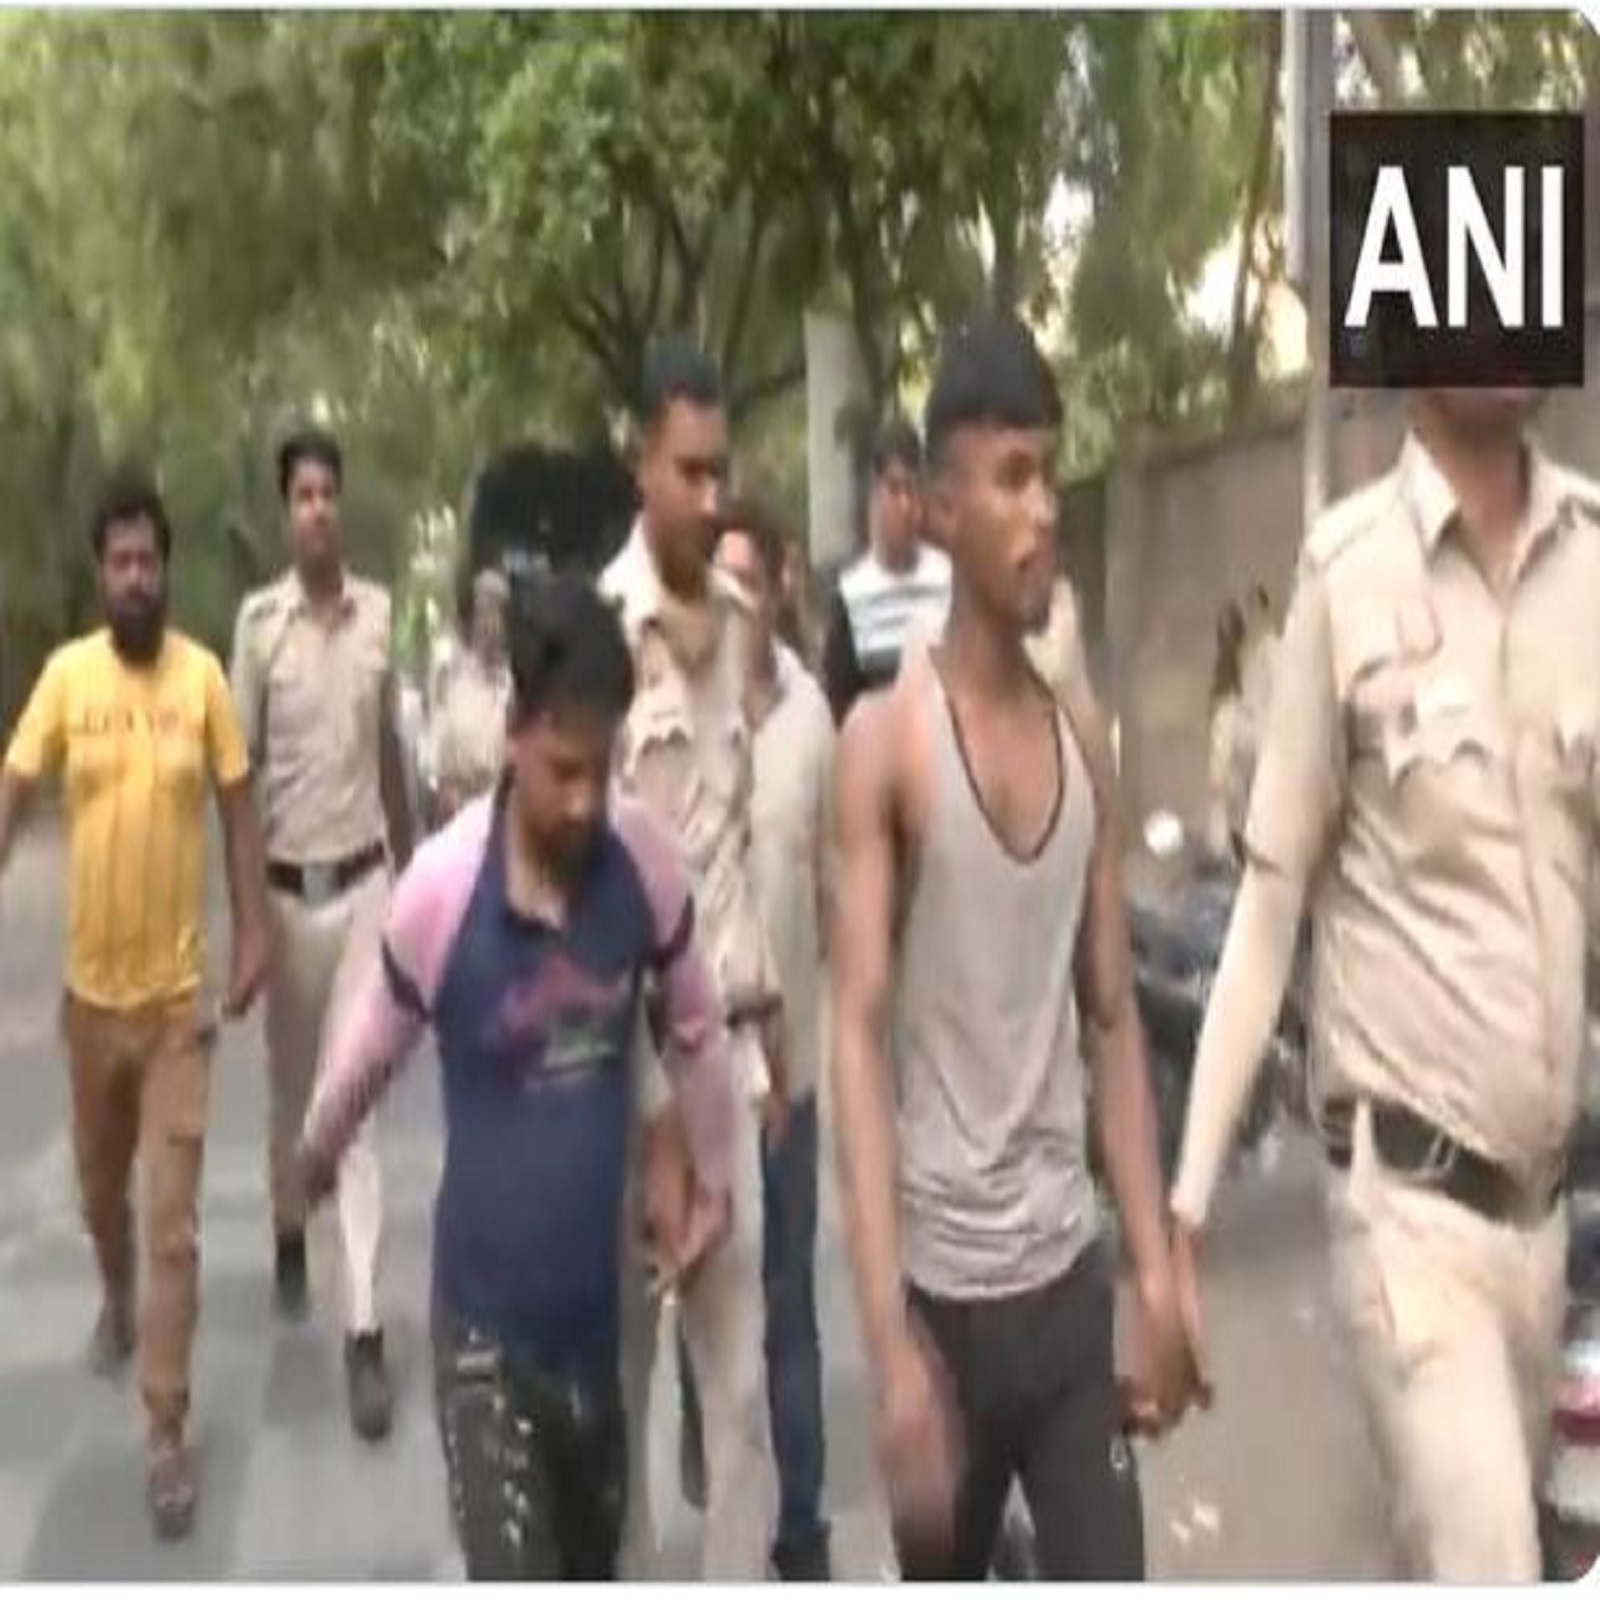 दिल्ली जहांगीरपुरी हिंसा मामले में गिरफ्तार 14 आरोपी रोहिणी कोर्ट में पेश (Image- ANI)